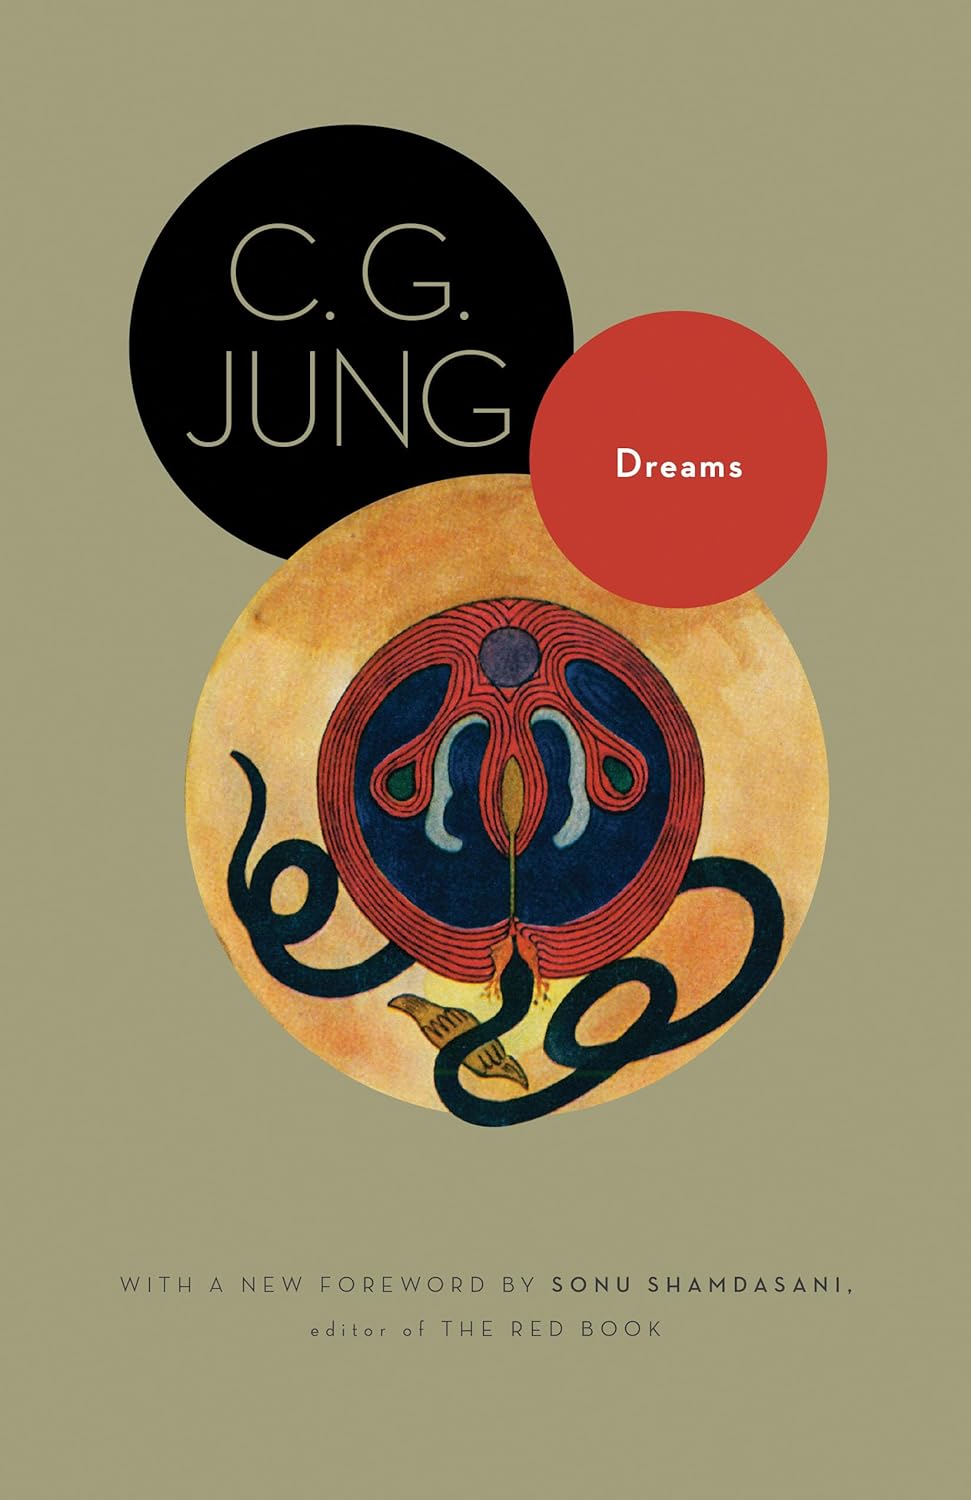 Dreams by C. G. Jung